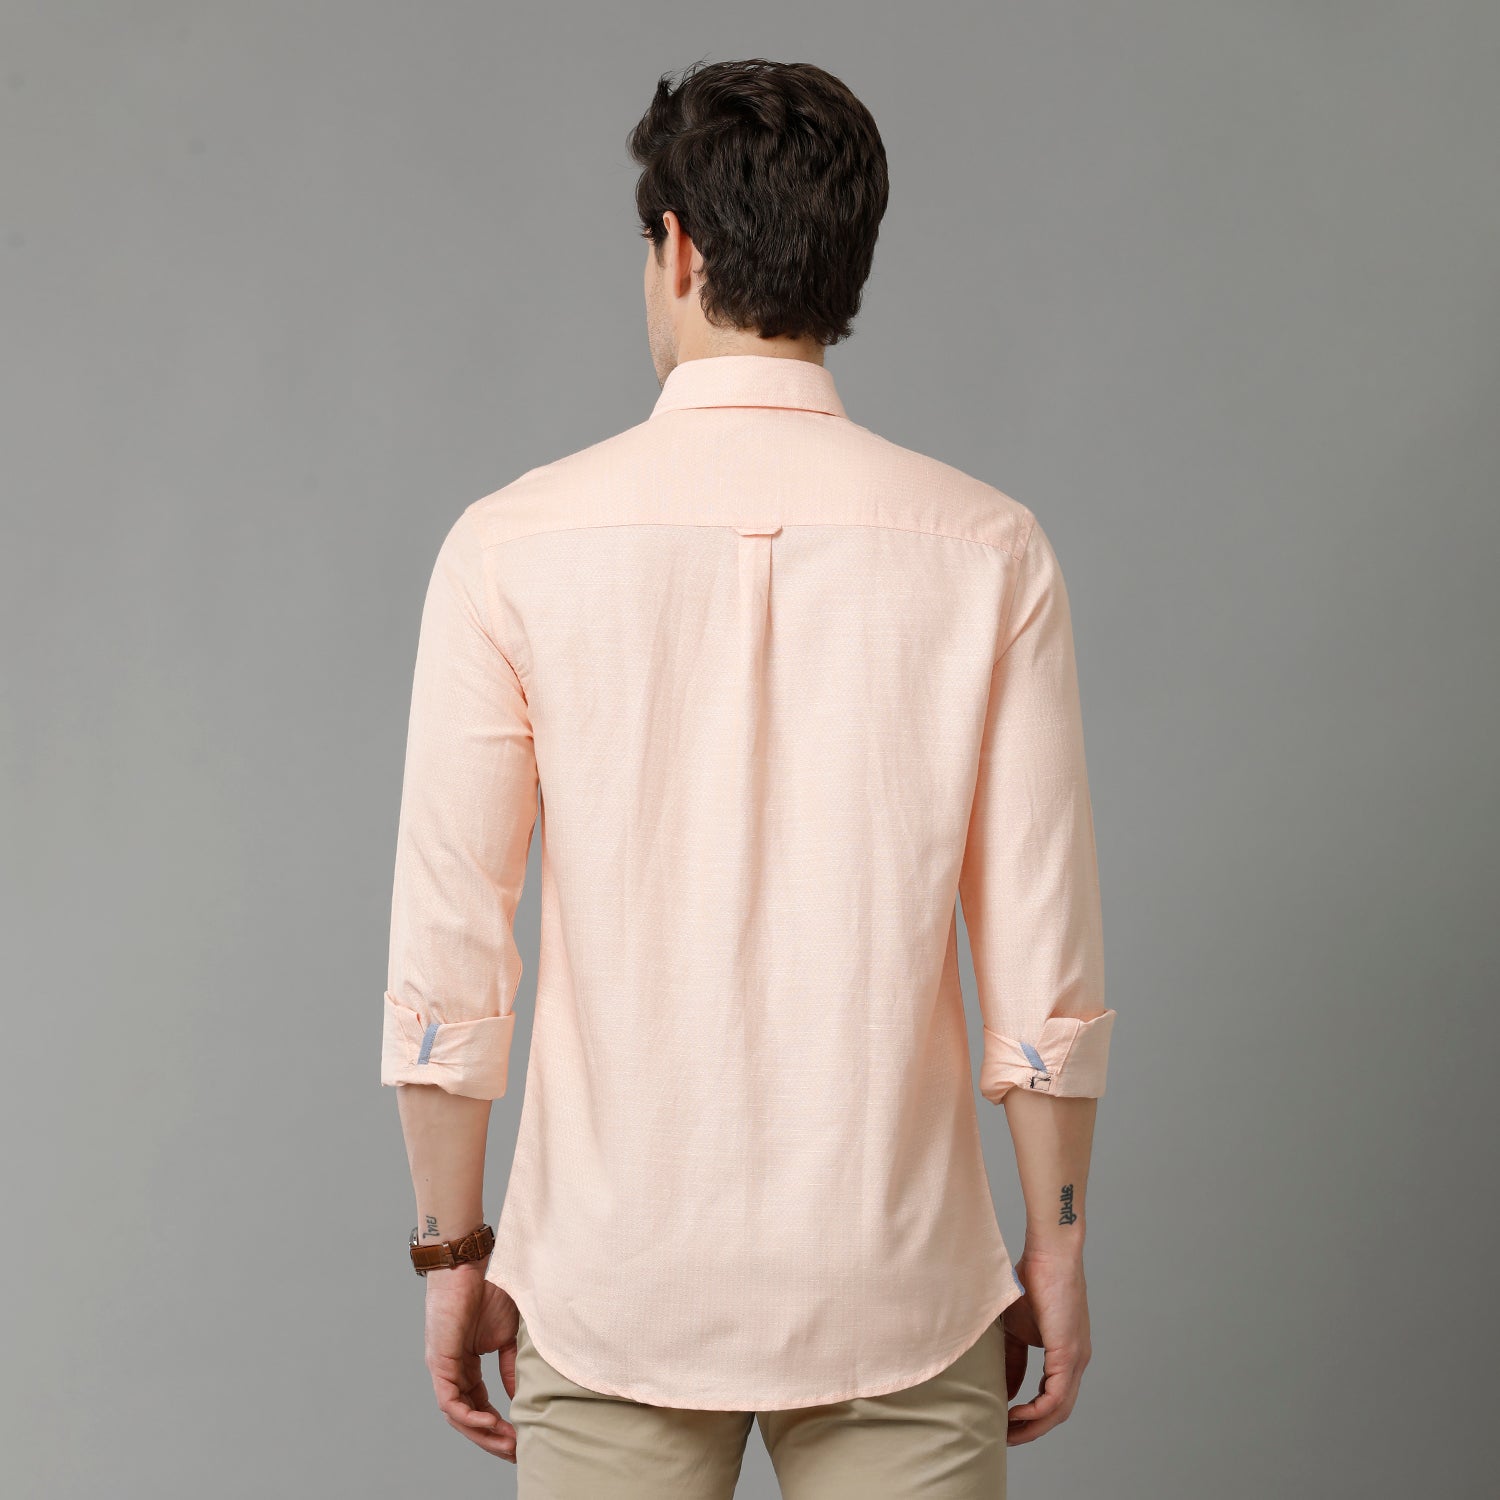 Peach Structure Casual Shirt